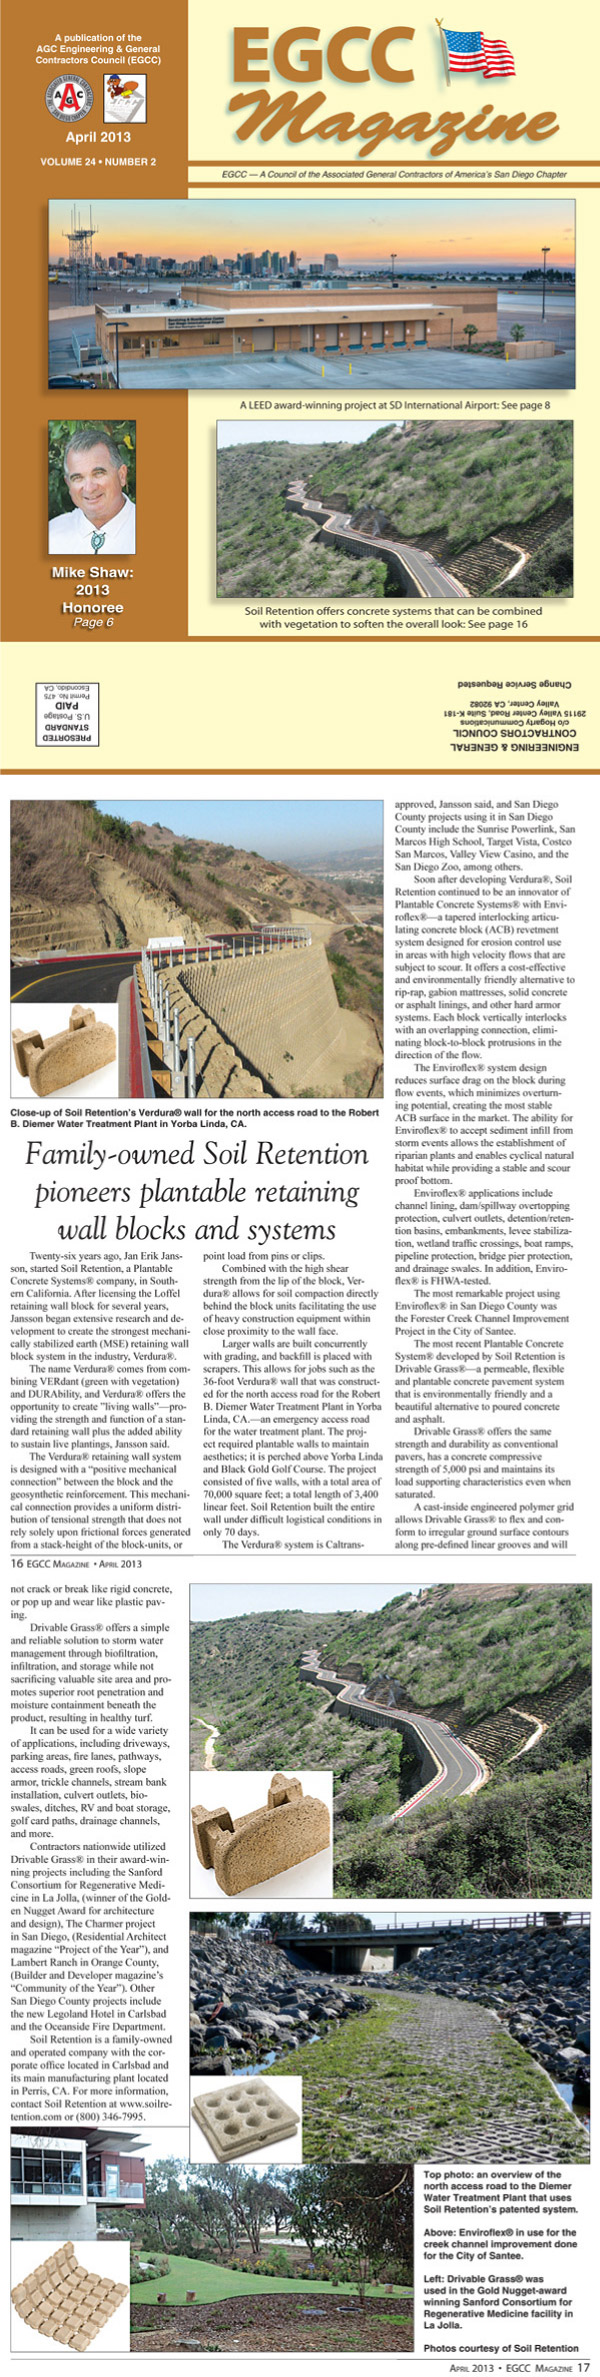 EGCC_Magazine_Soil_Retention_Article_2013